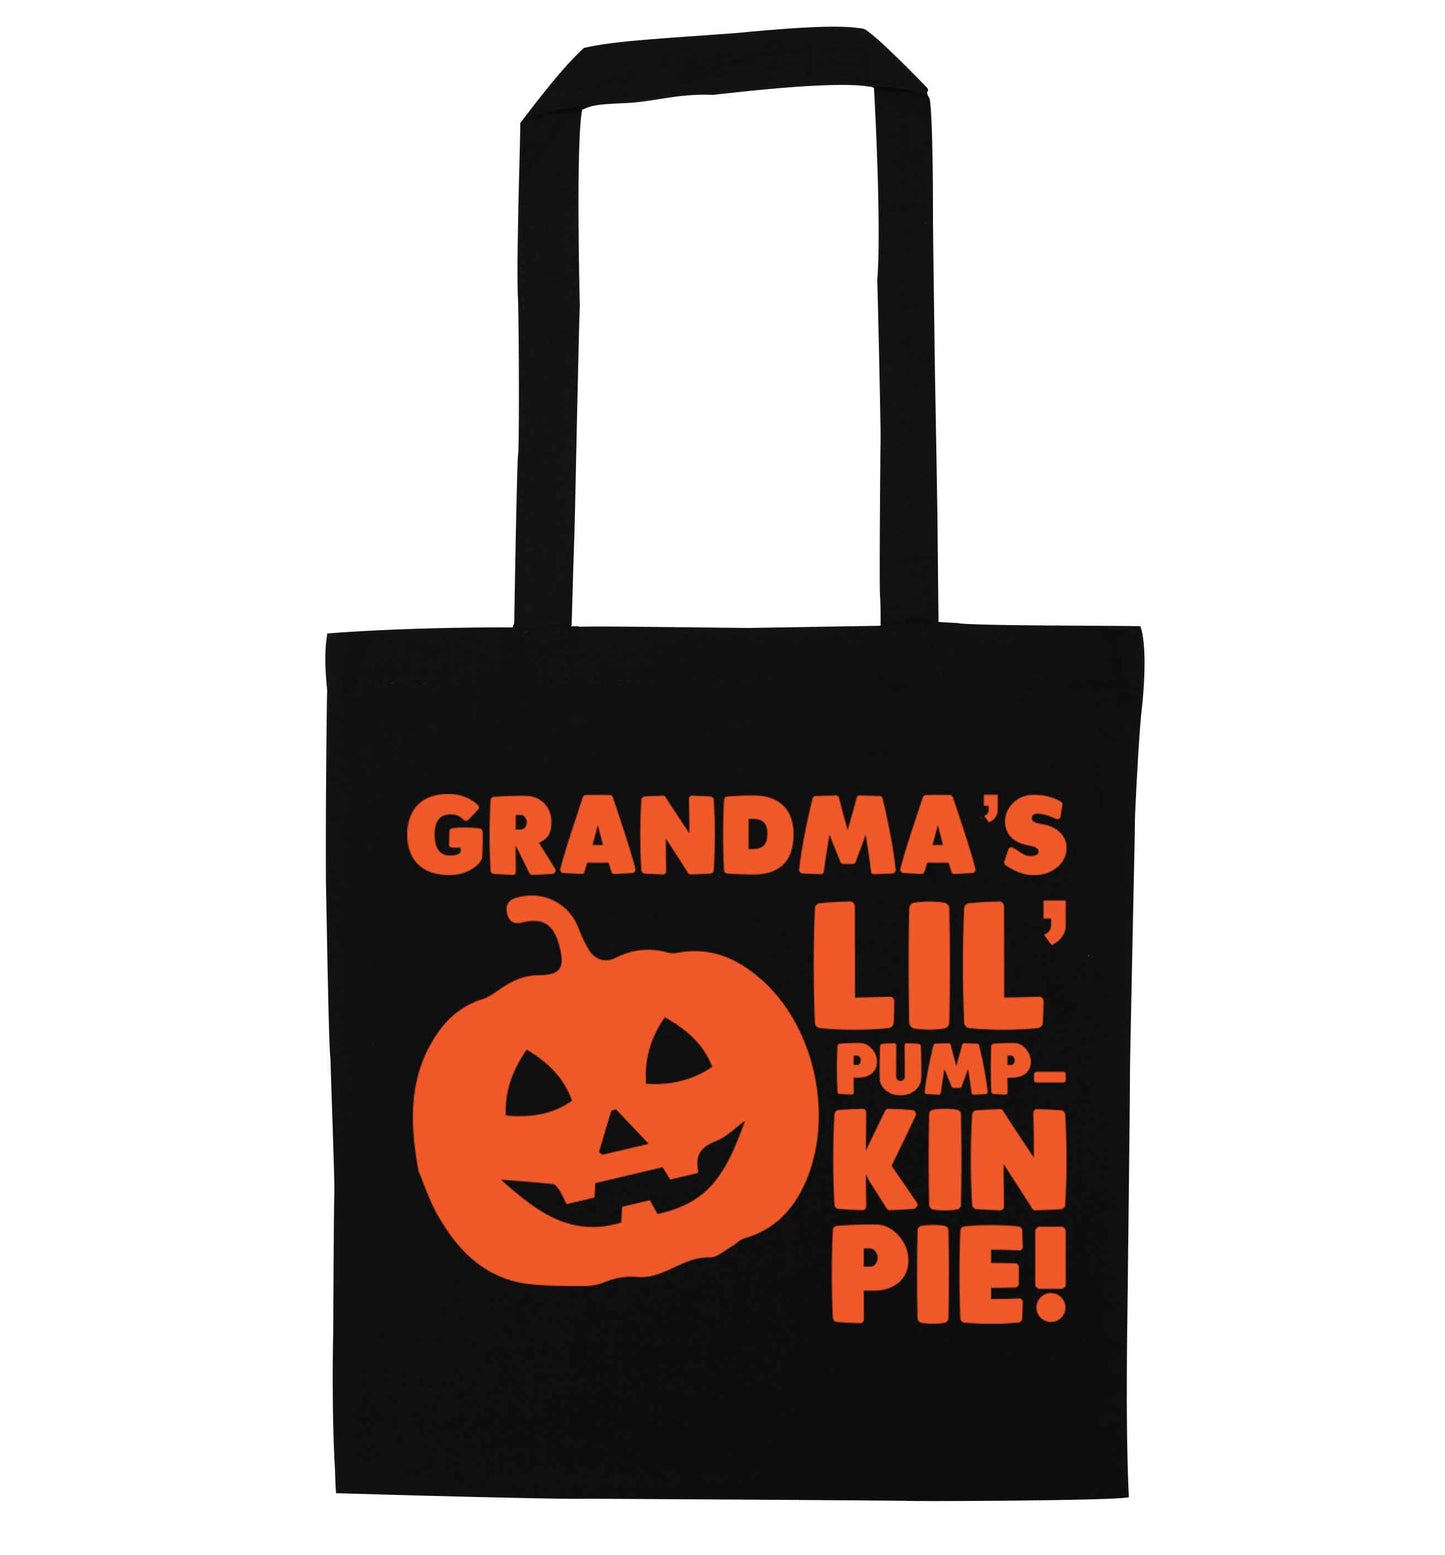 Grandma's lil' pumpkin pie black tote bag